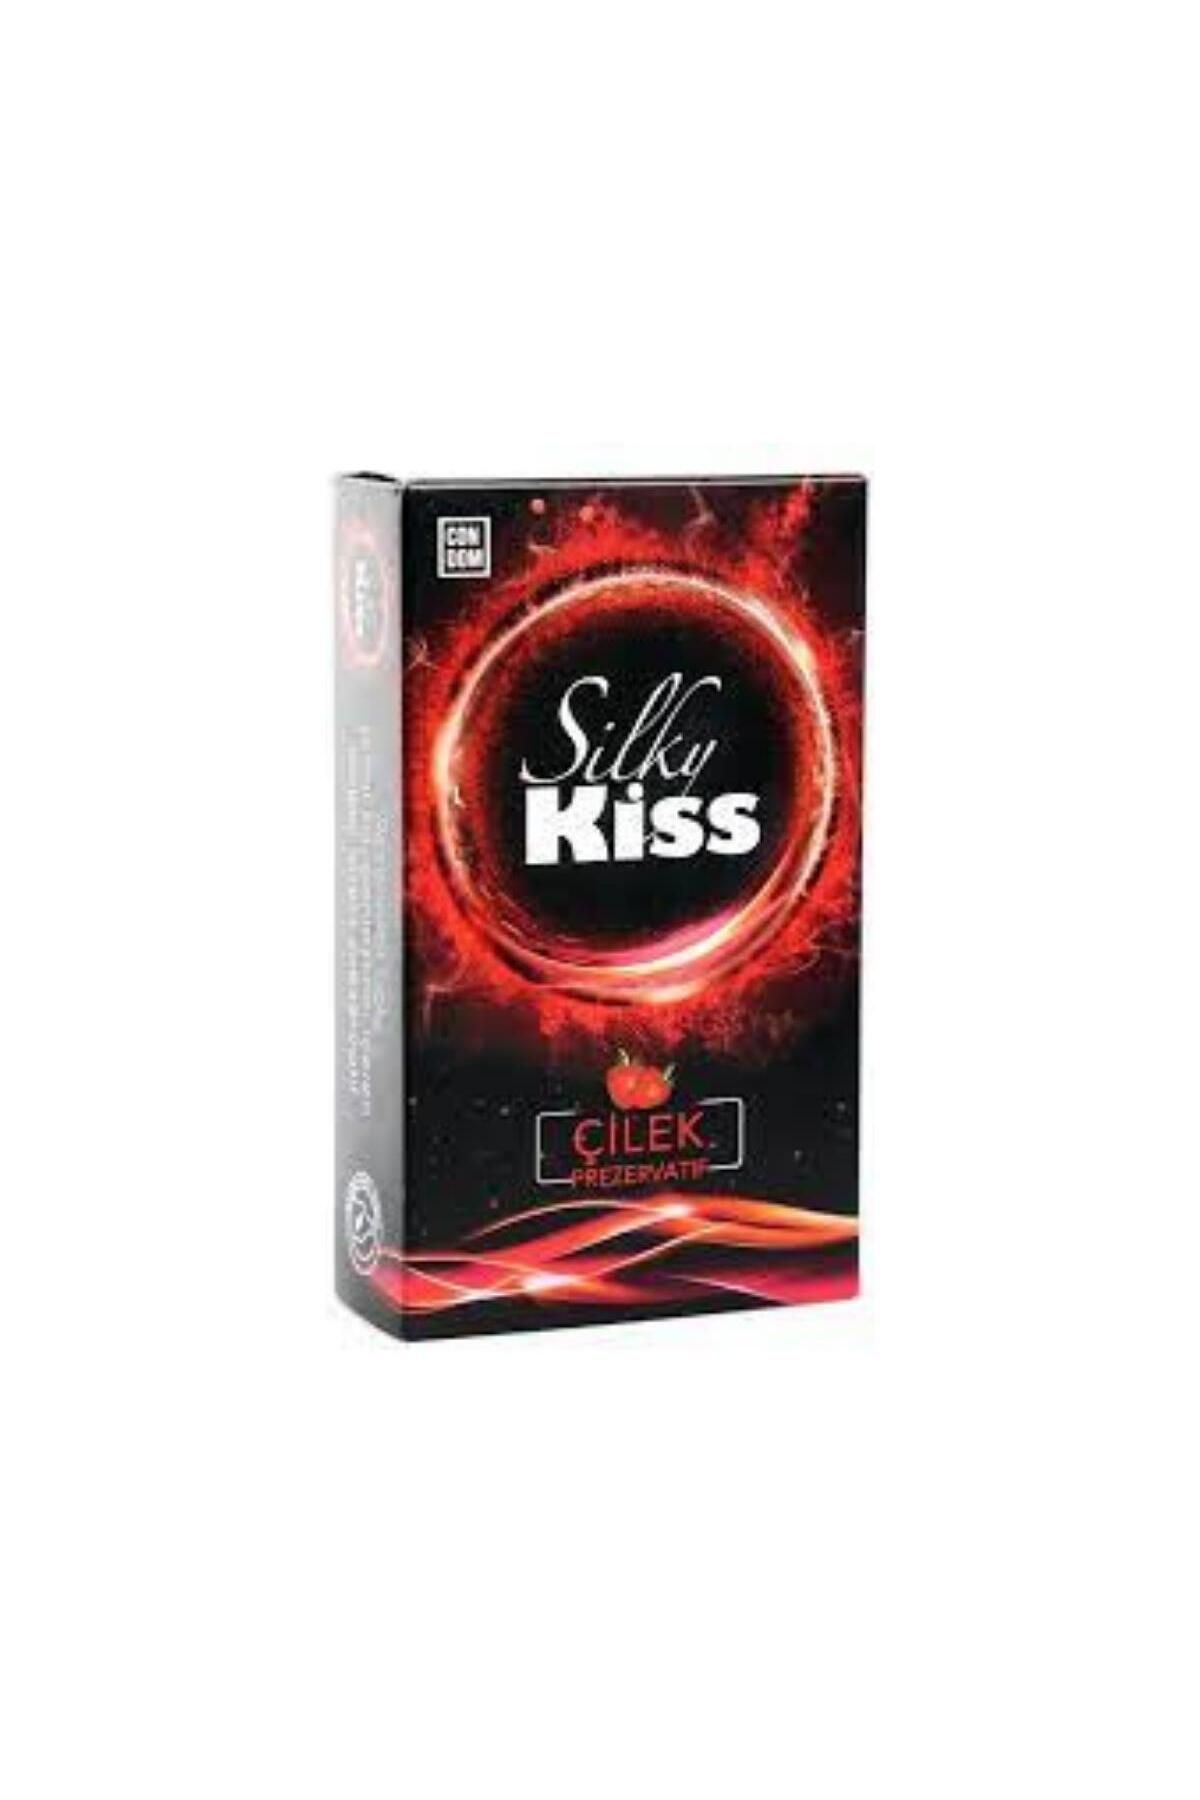 Silky Kiss SİLKY KİSS - PREZERVATİF ÇİLEK 12Lİ LATEX KONDOM